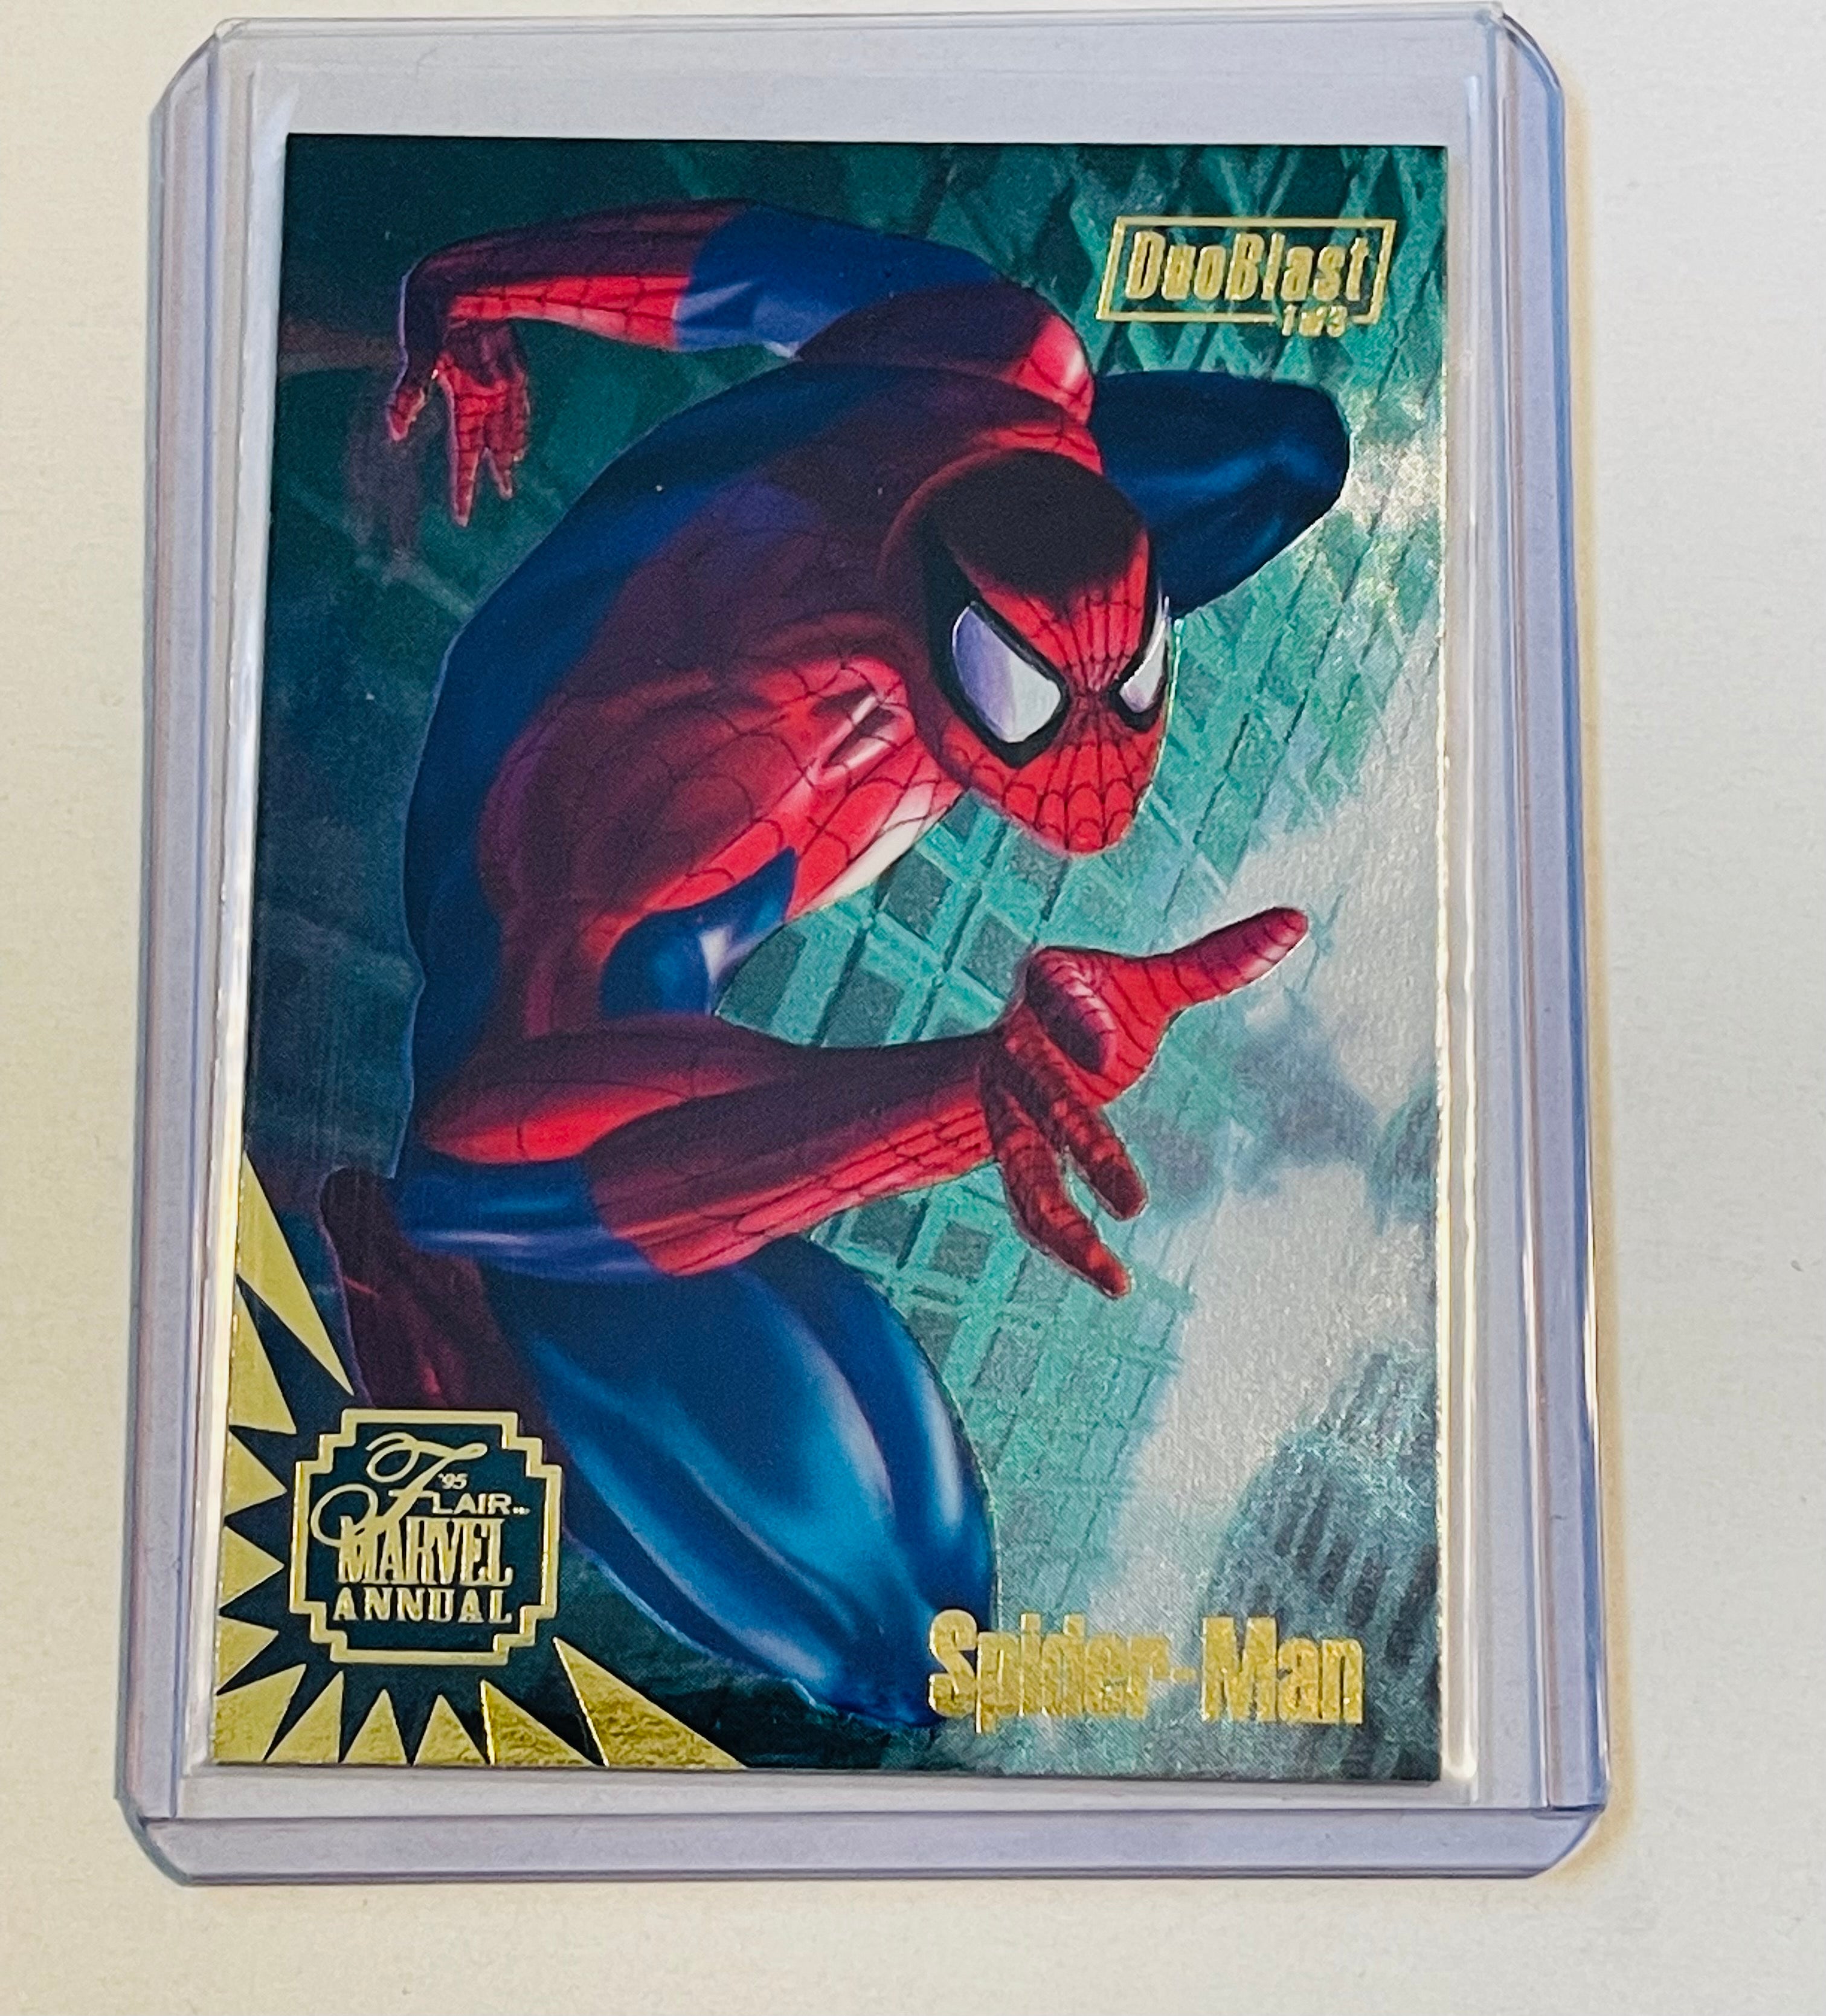 Spider-Man Fleer Marvel Annual foil doublast doubles sided insert card 1995